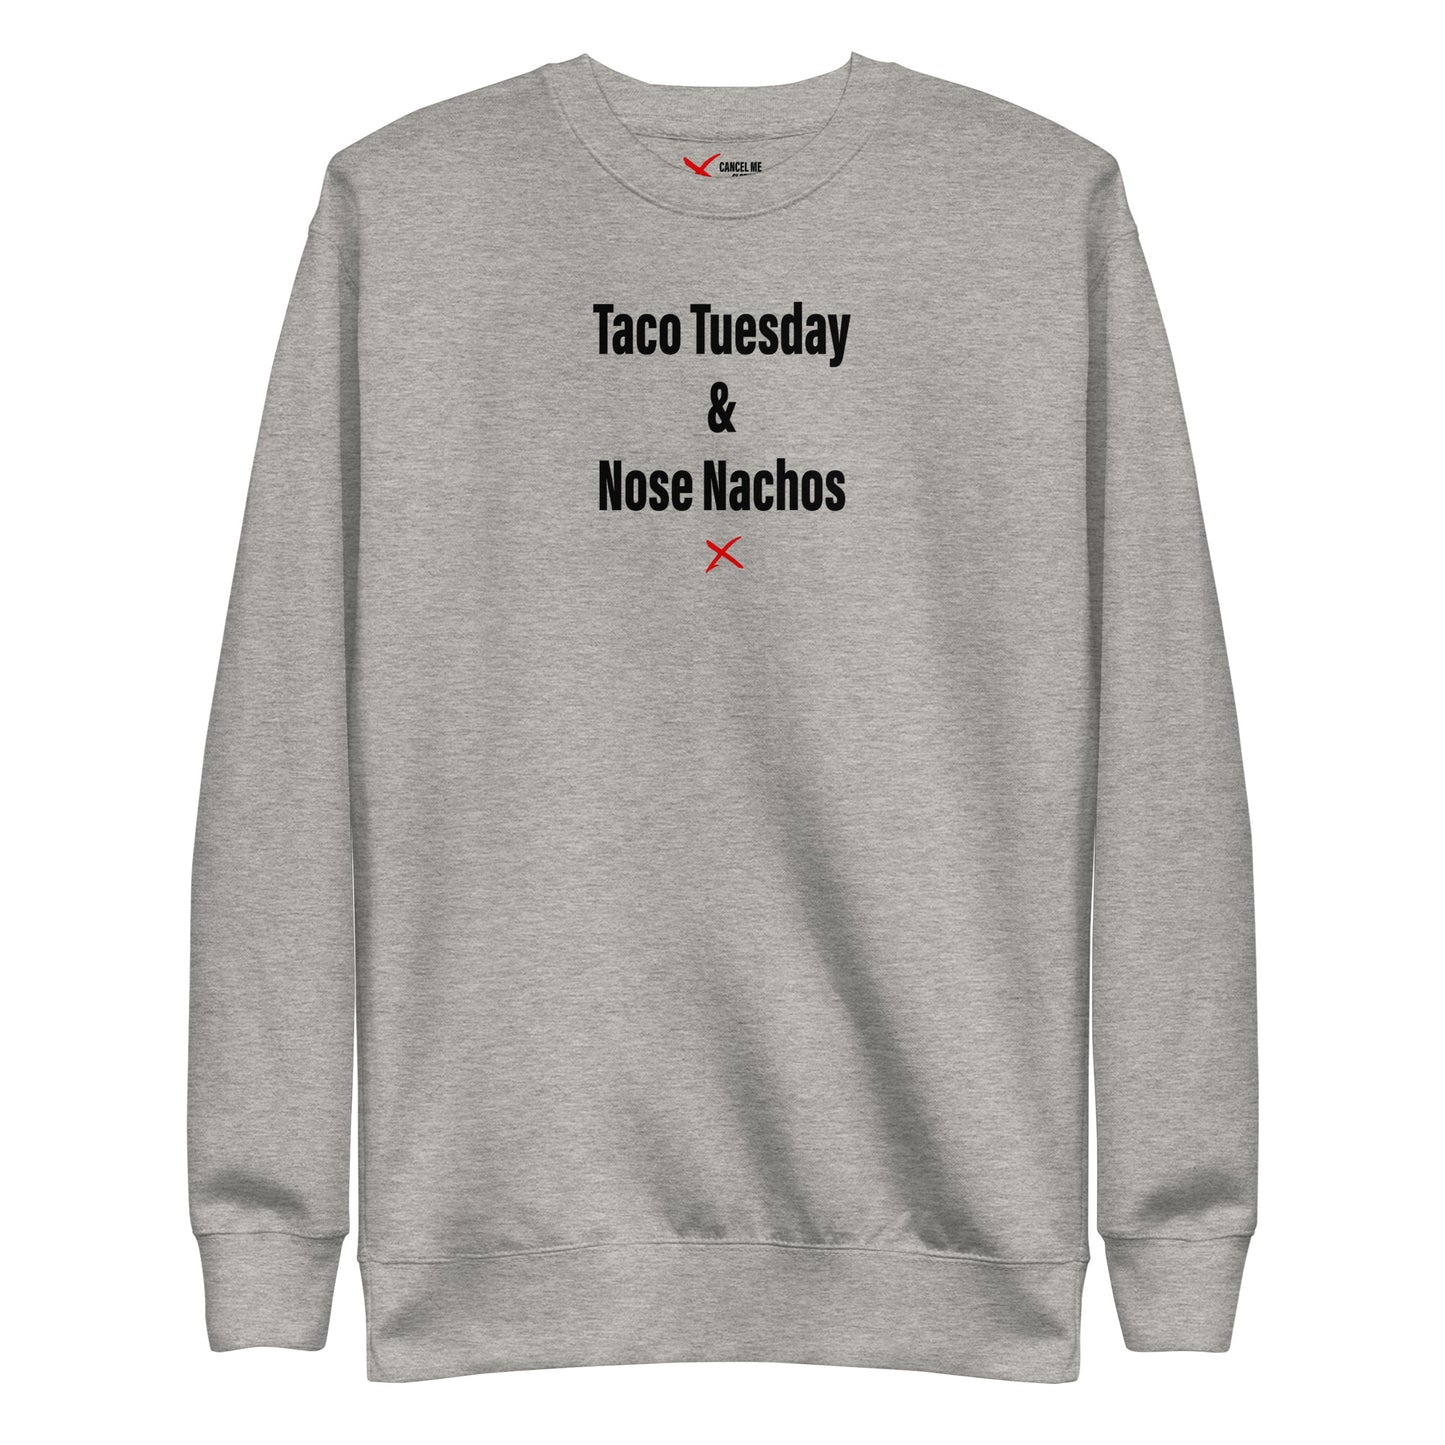 Taco Tuesday & Nose Nachos - Sweatshirt